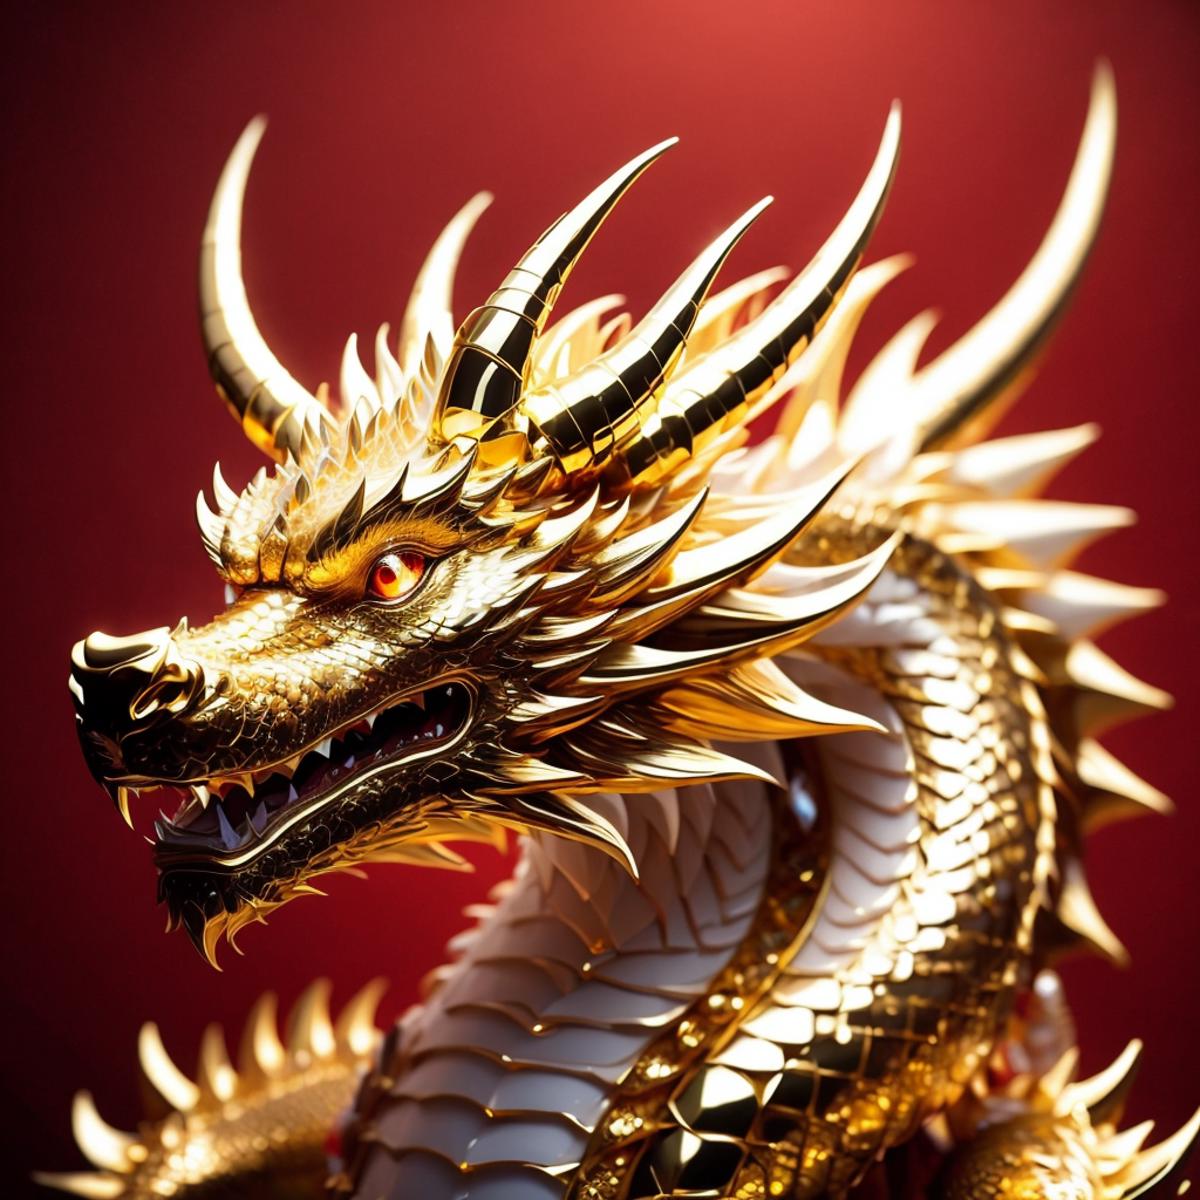 Chinese Dragon(中国龙) image by tin18688783